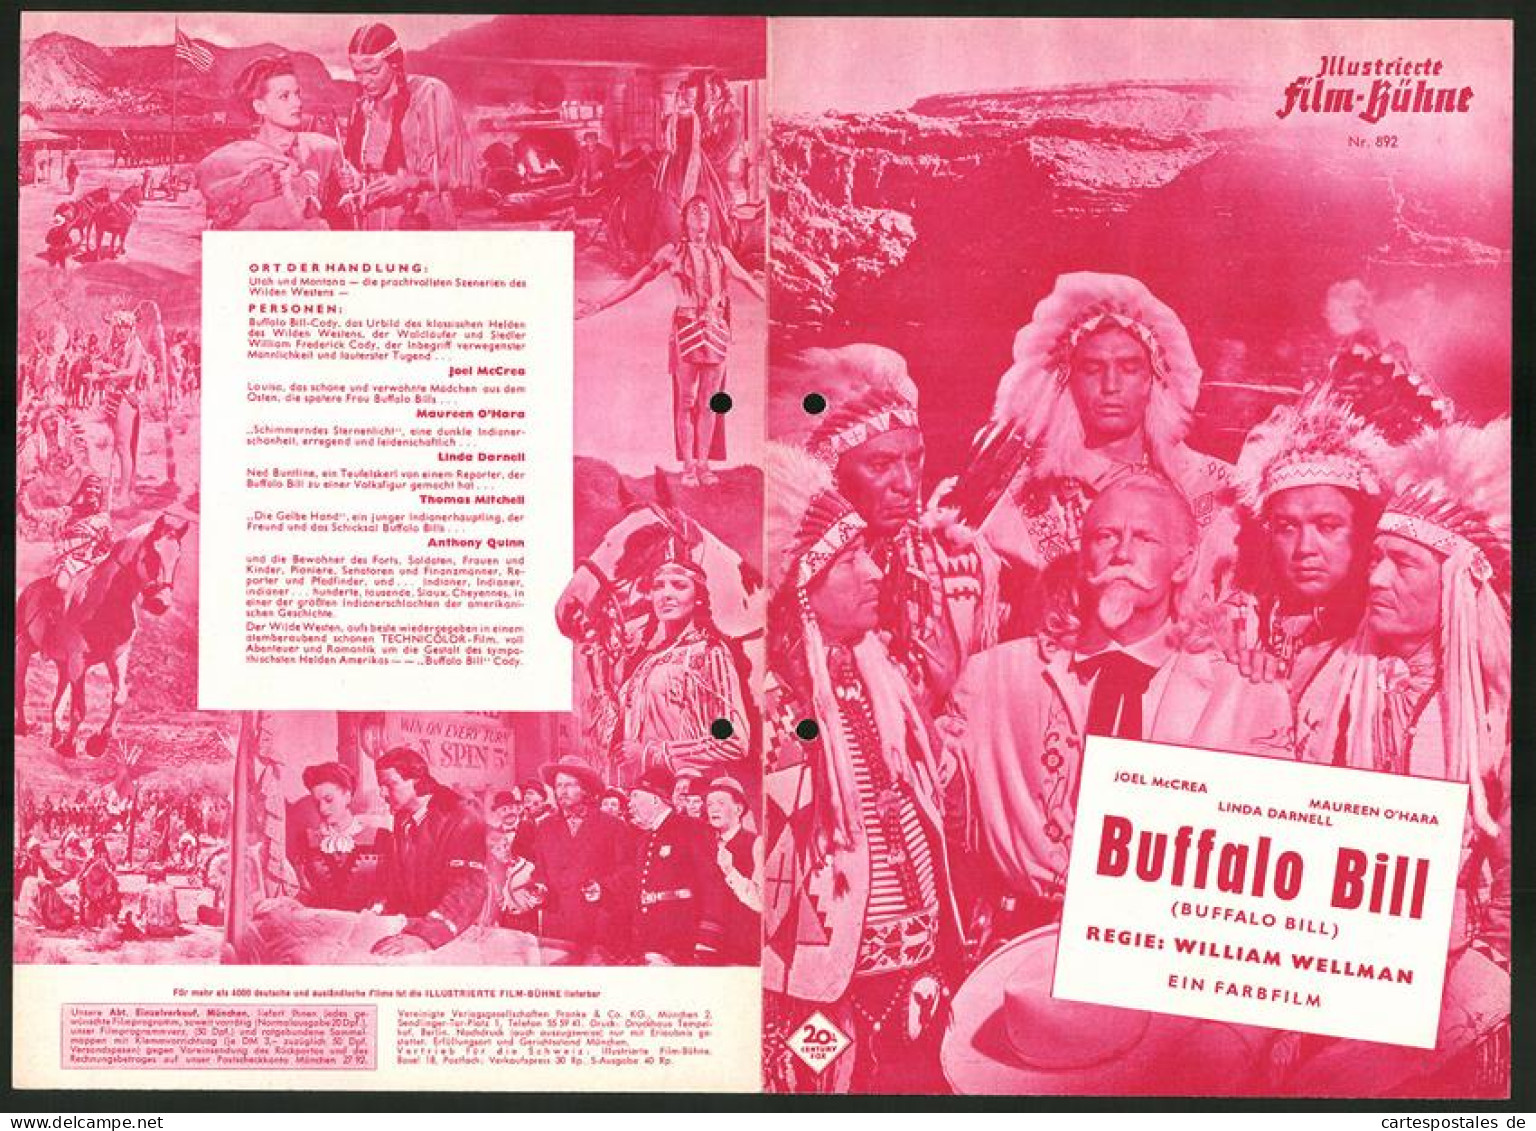 Filmprogramm IFB Nr. 892, Buffalo Bill, Joel McCrea, Maureen O`Hara, Regie: William Wellman  - Zeitschriften